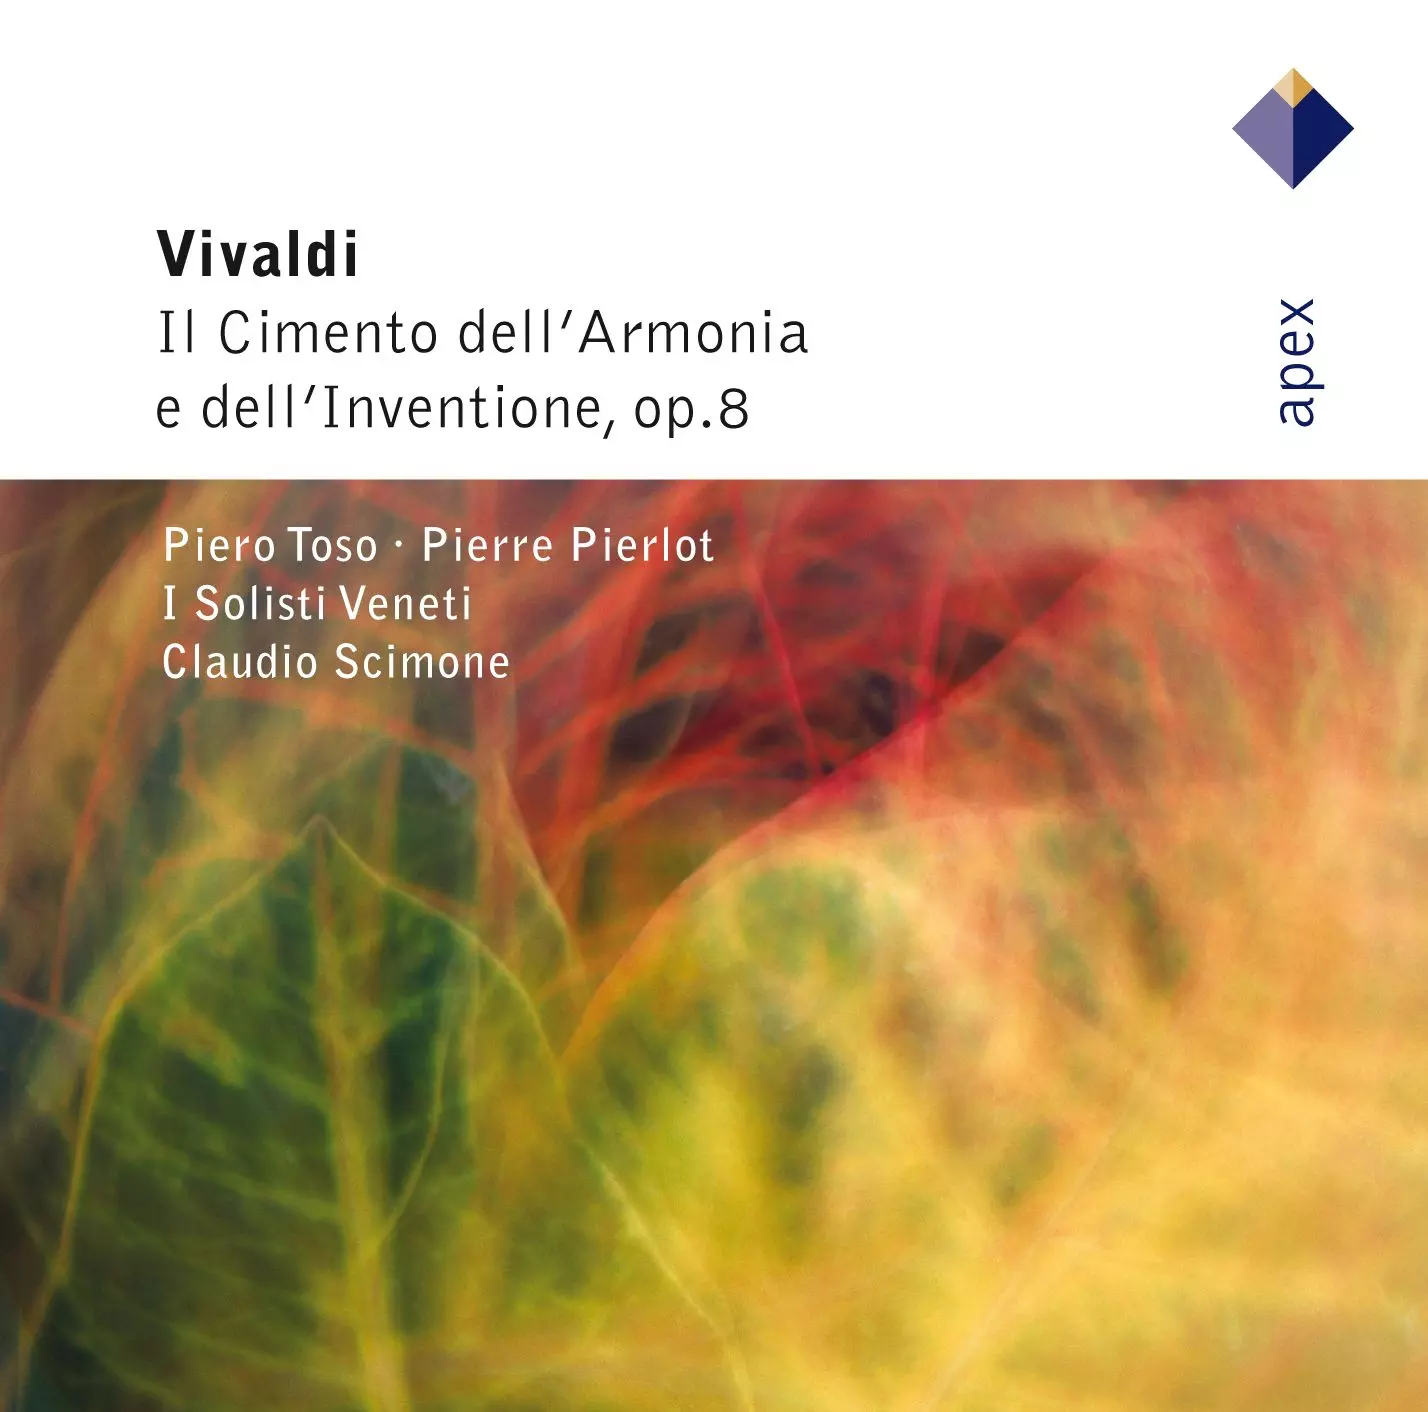 Vivaldi: Le quattro stagioni (The Four Seasons)